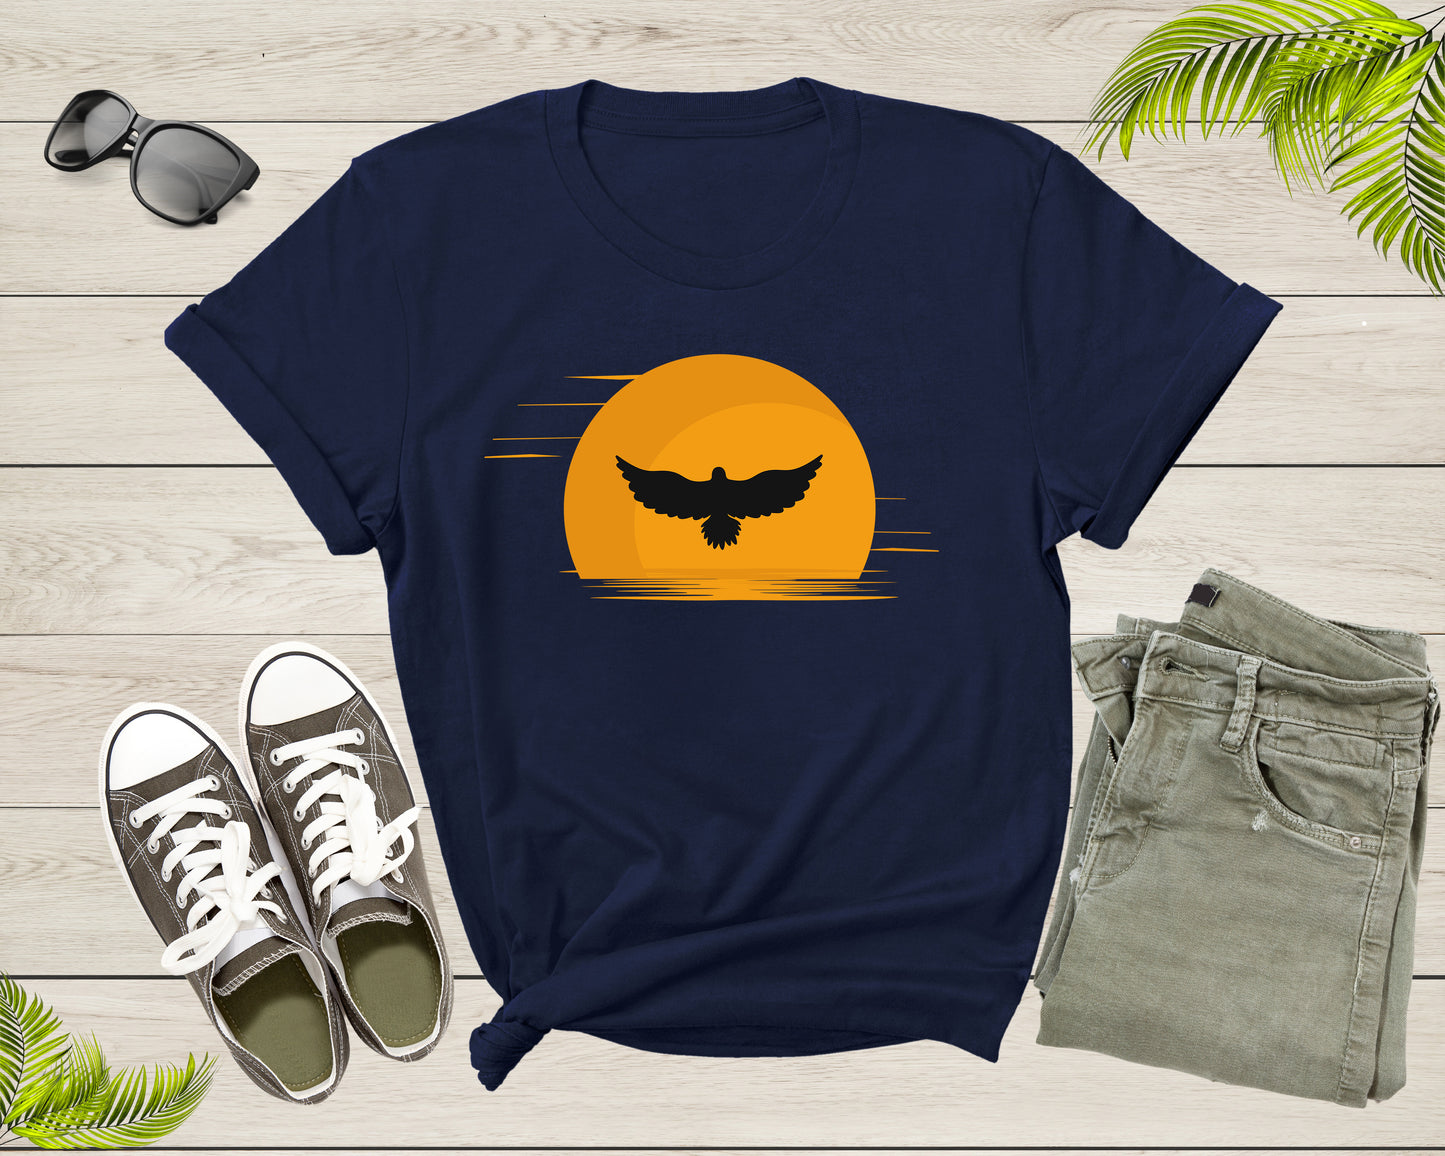 Cute Flying Eagle Bird Animal at Sunset for Men Women Kids T-Shirt Soaring American Eagle Gift T Shirt for Men Women Kids Boys Girls Tshirt